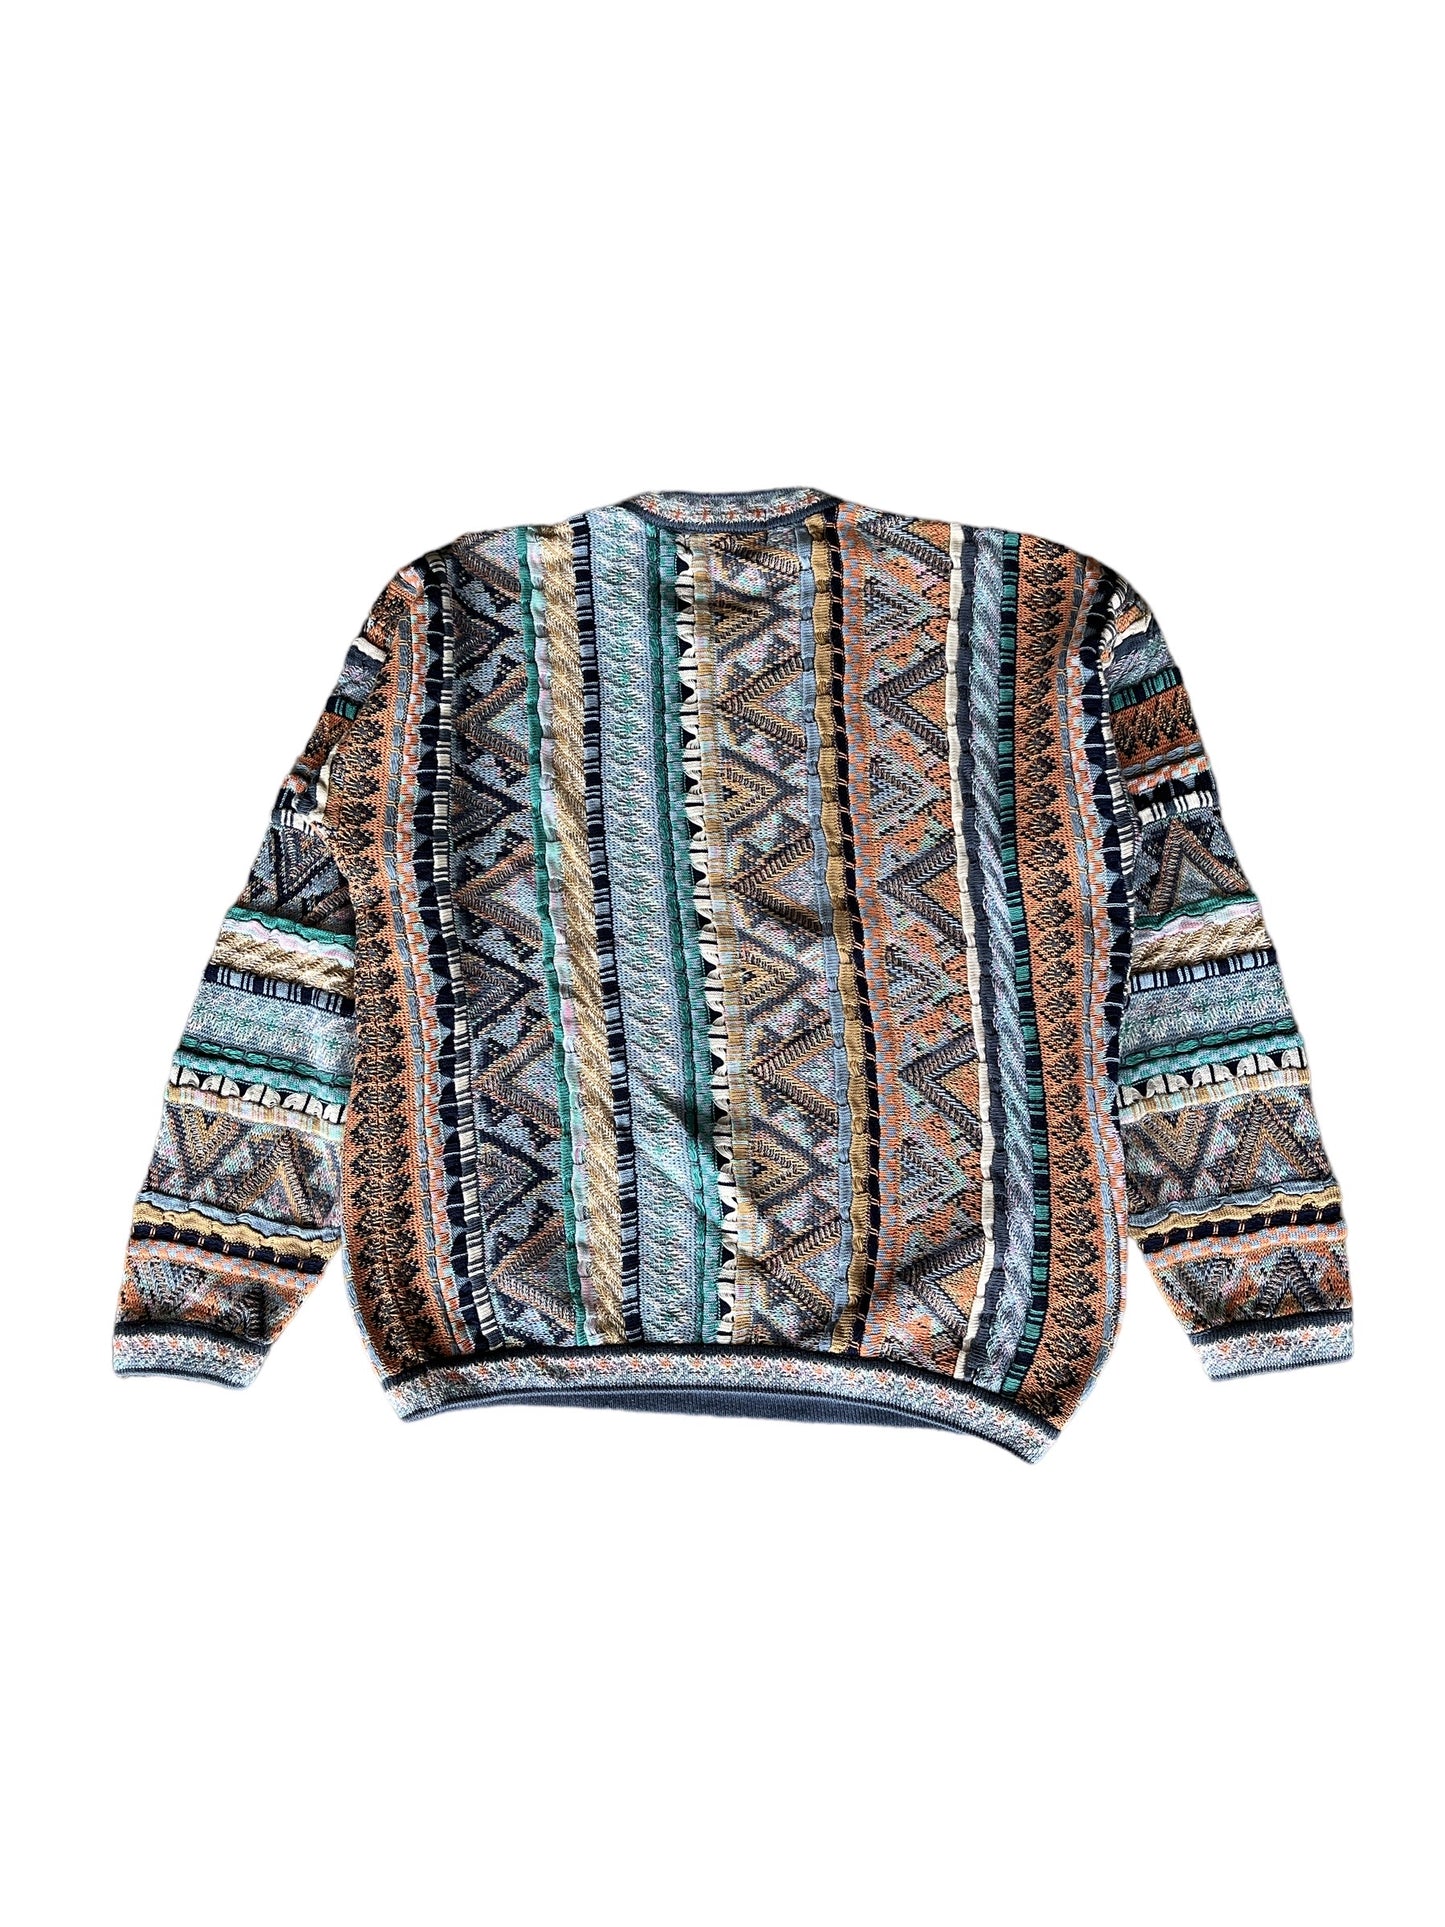 Vintage Tundra 3d Knit Sweater